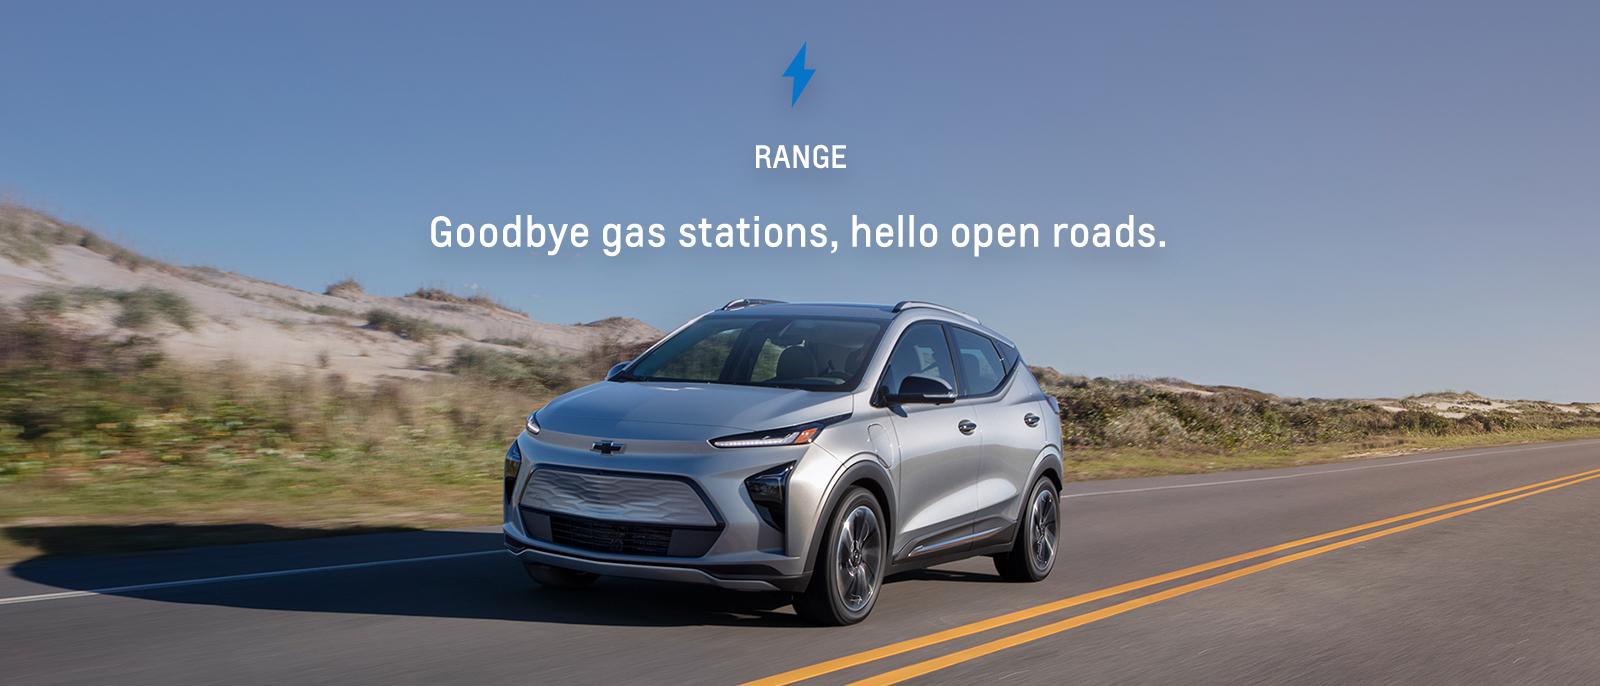 Goodbye gas stations, hello open roads.